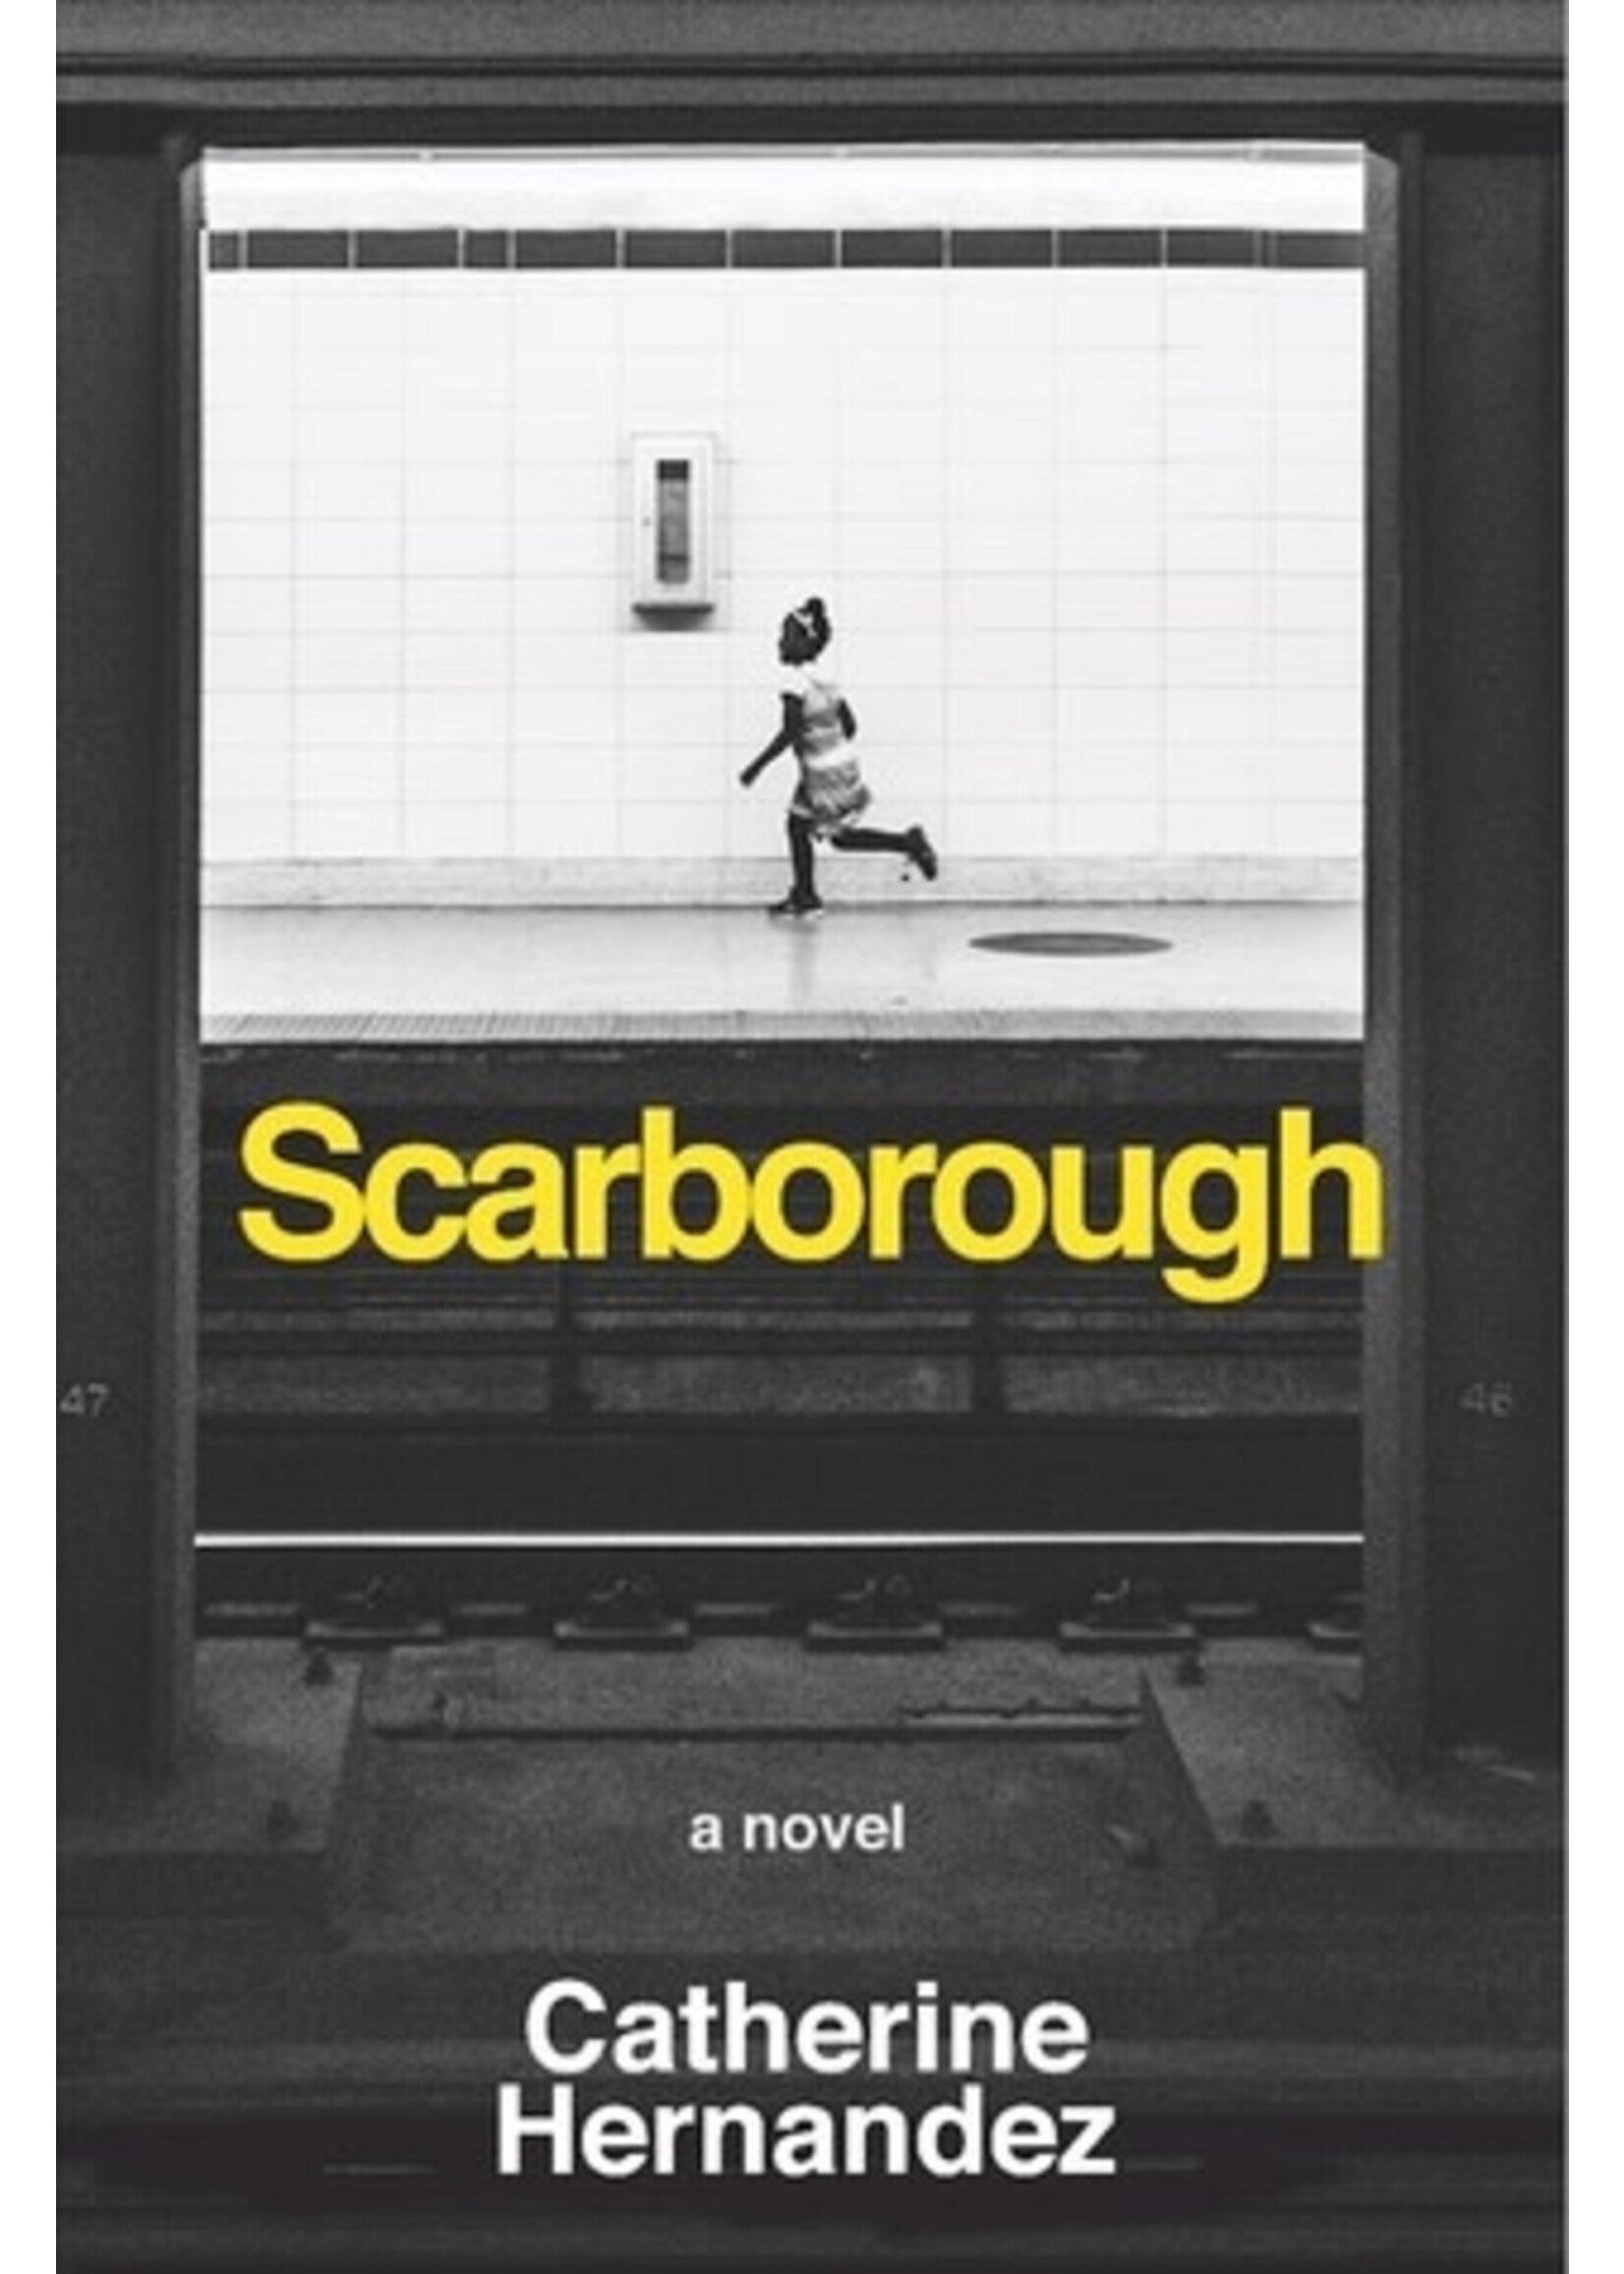 Scarborough by Catherine Hernandez